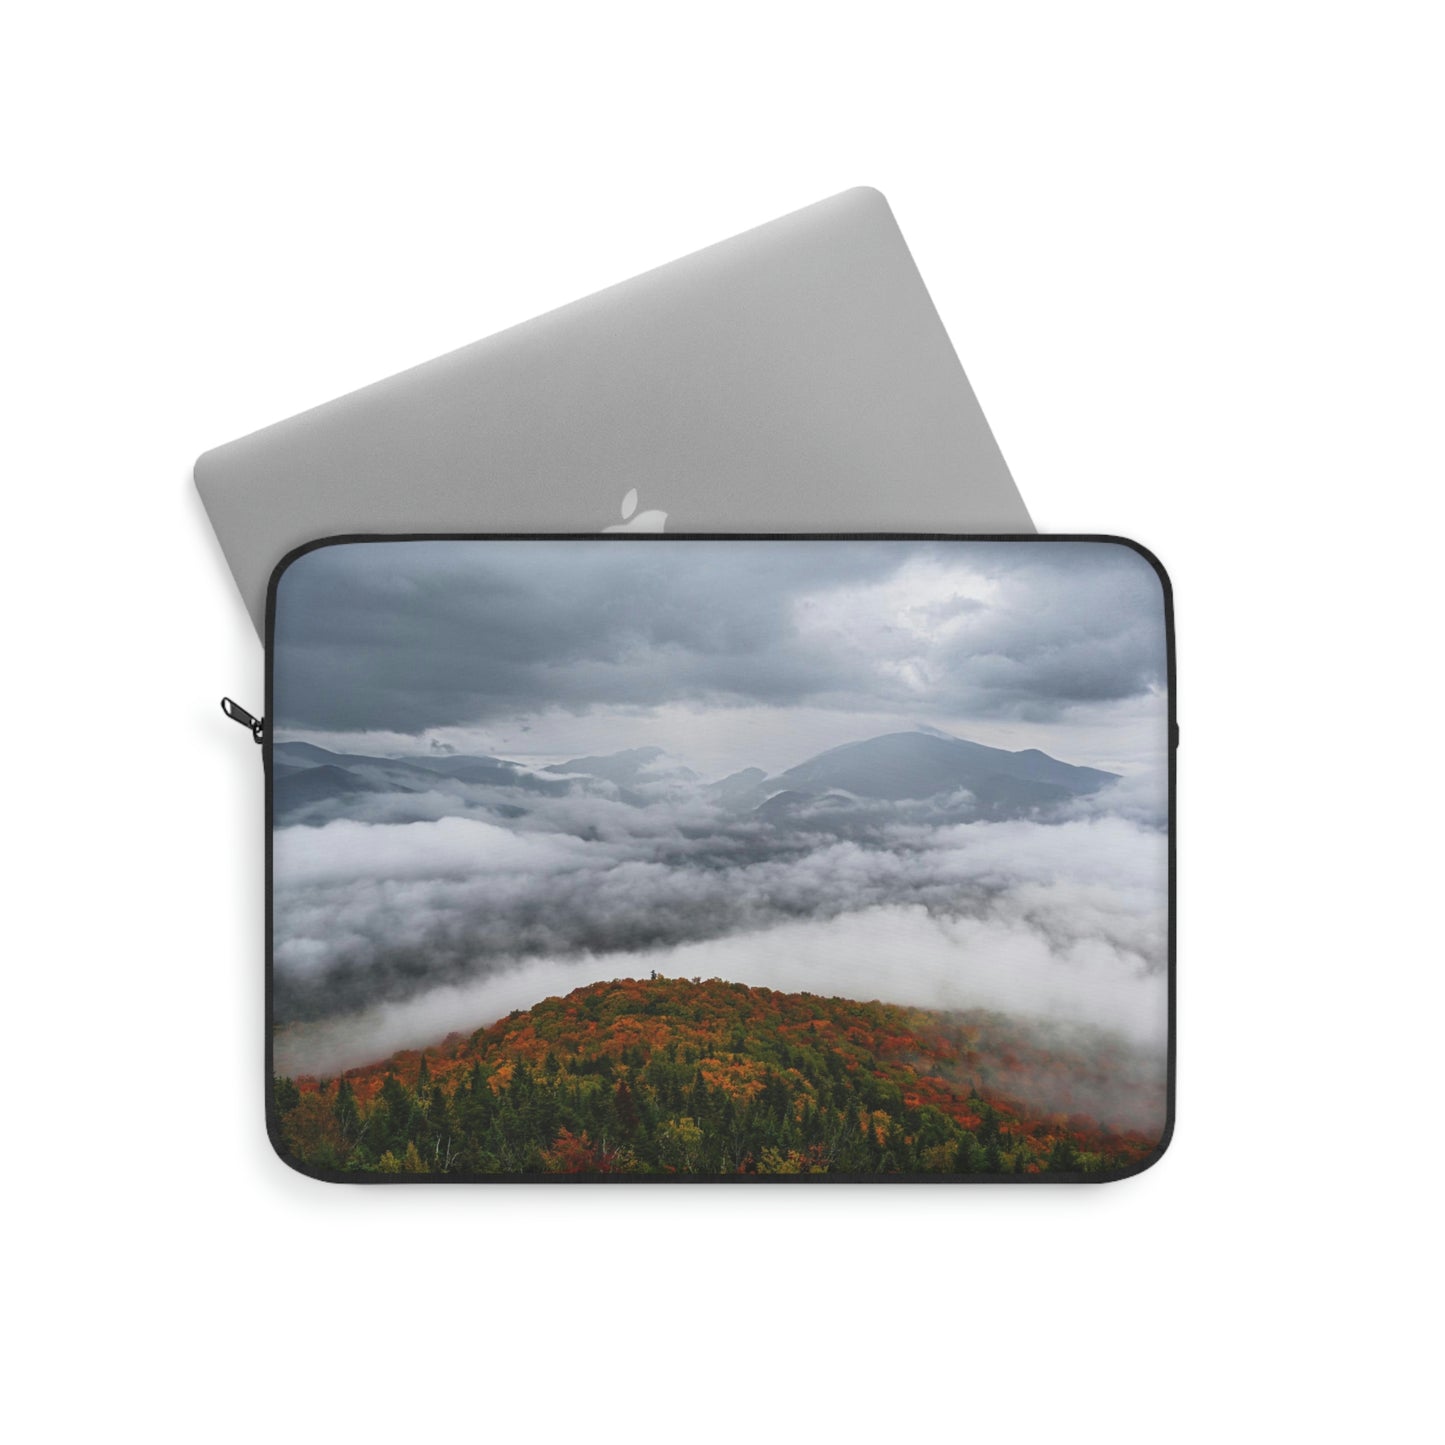 Laptop Sleeve - Autumn Mood from Mt. Van Hoevenberg